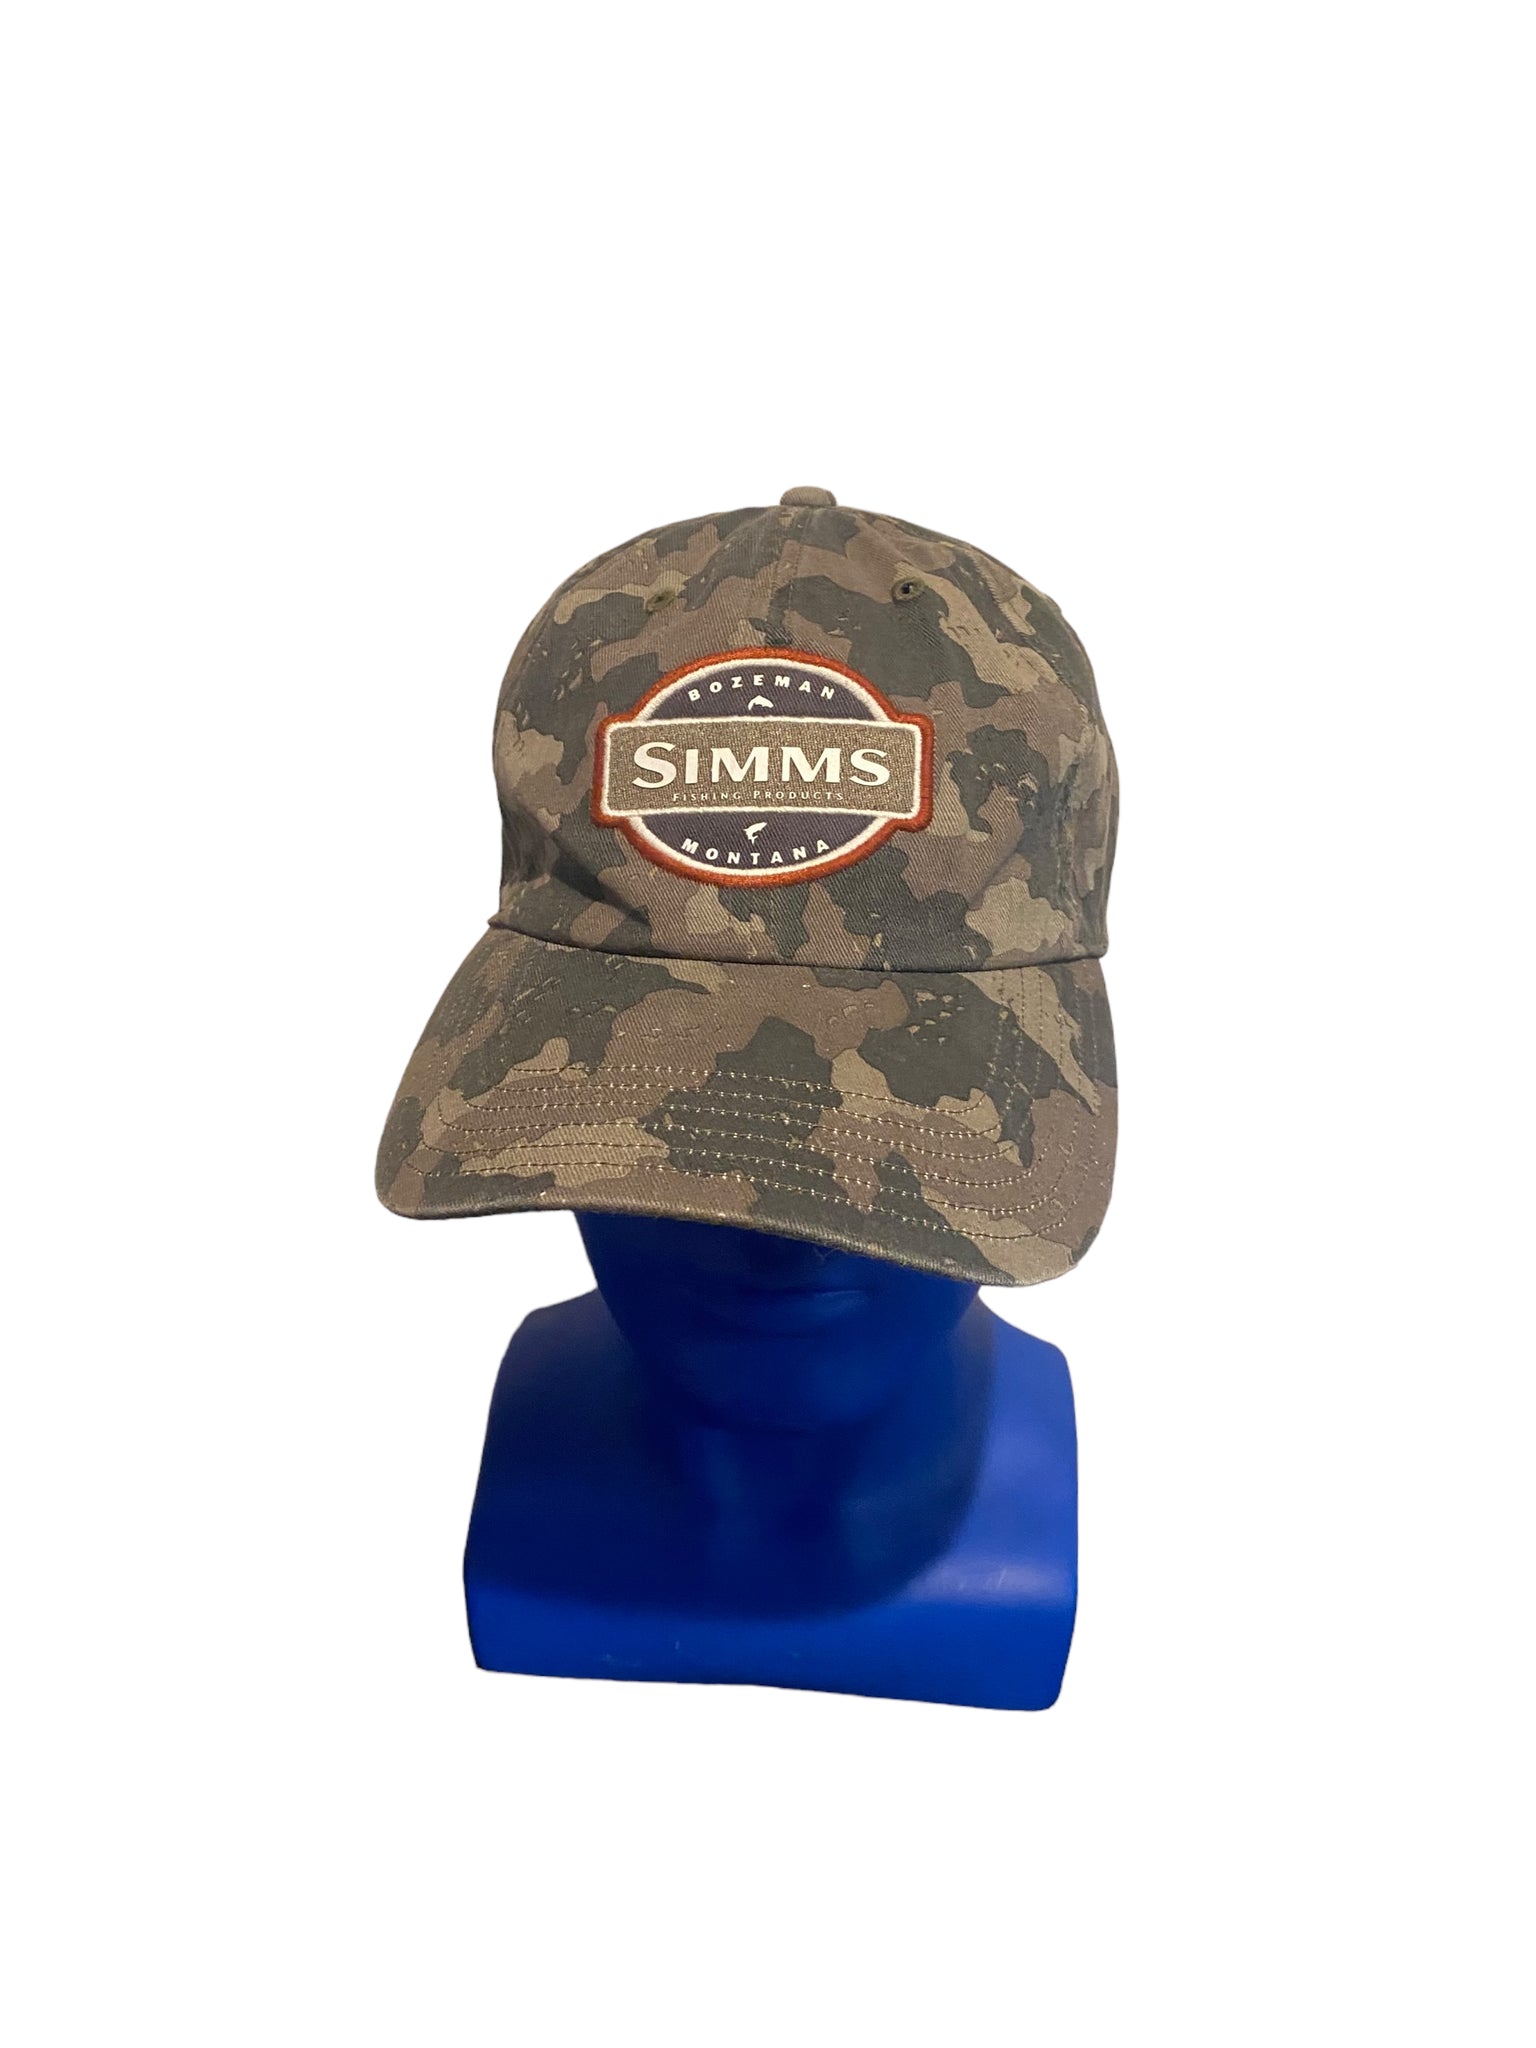 Simms Fishing Products Strapback Hat Cap Bozeman Montana Camo Logo Patch New